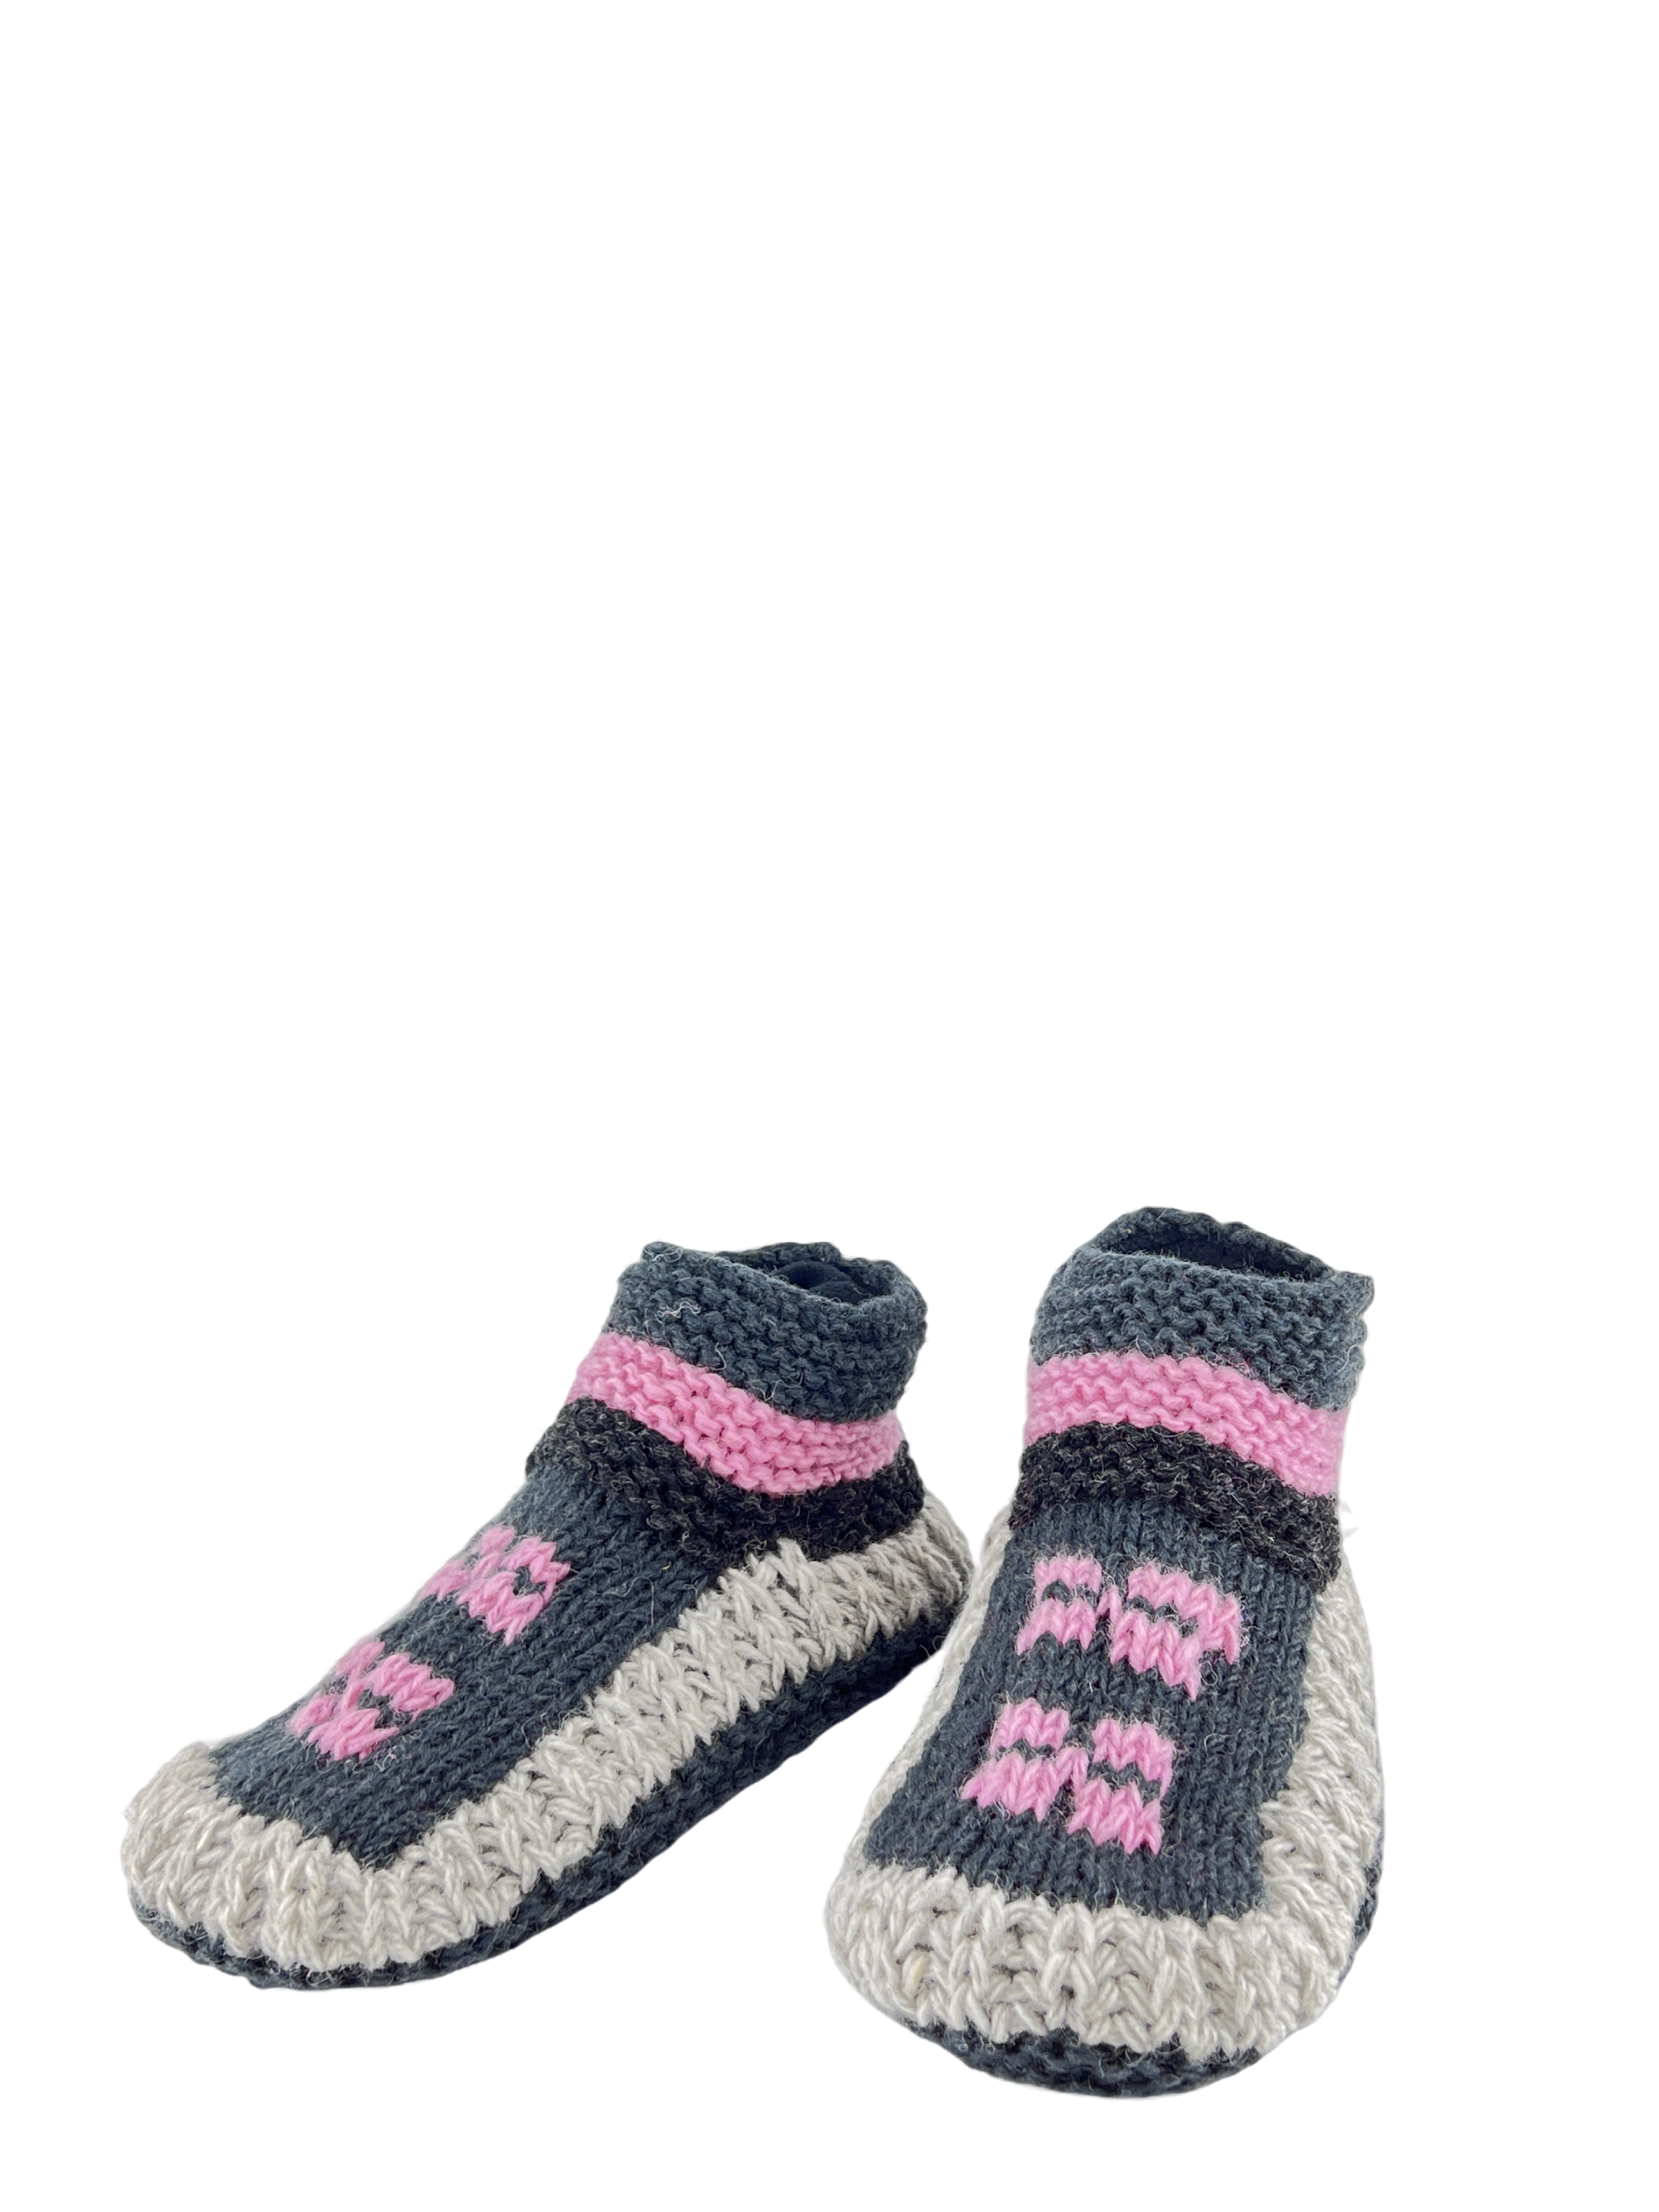 Walking boot socks | Thick warm socks |Cute slide slipper Anti-Skid Sole | Fuzzy Slippers Boots | Soft Woolen House Slippers for Men & Women